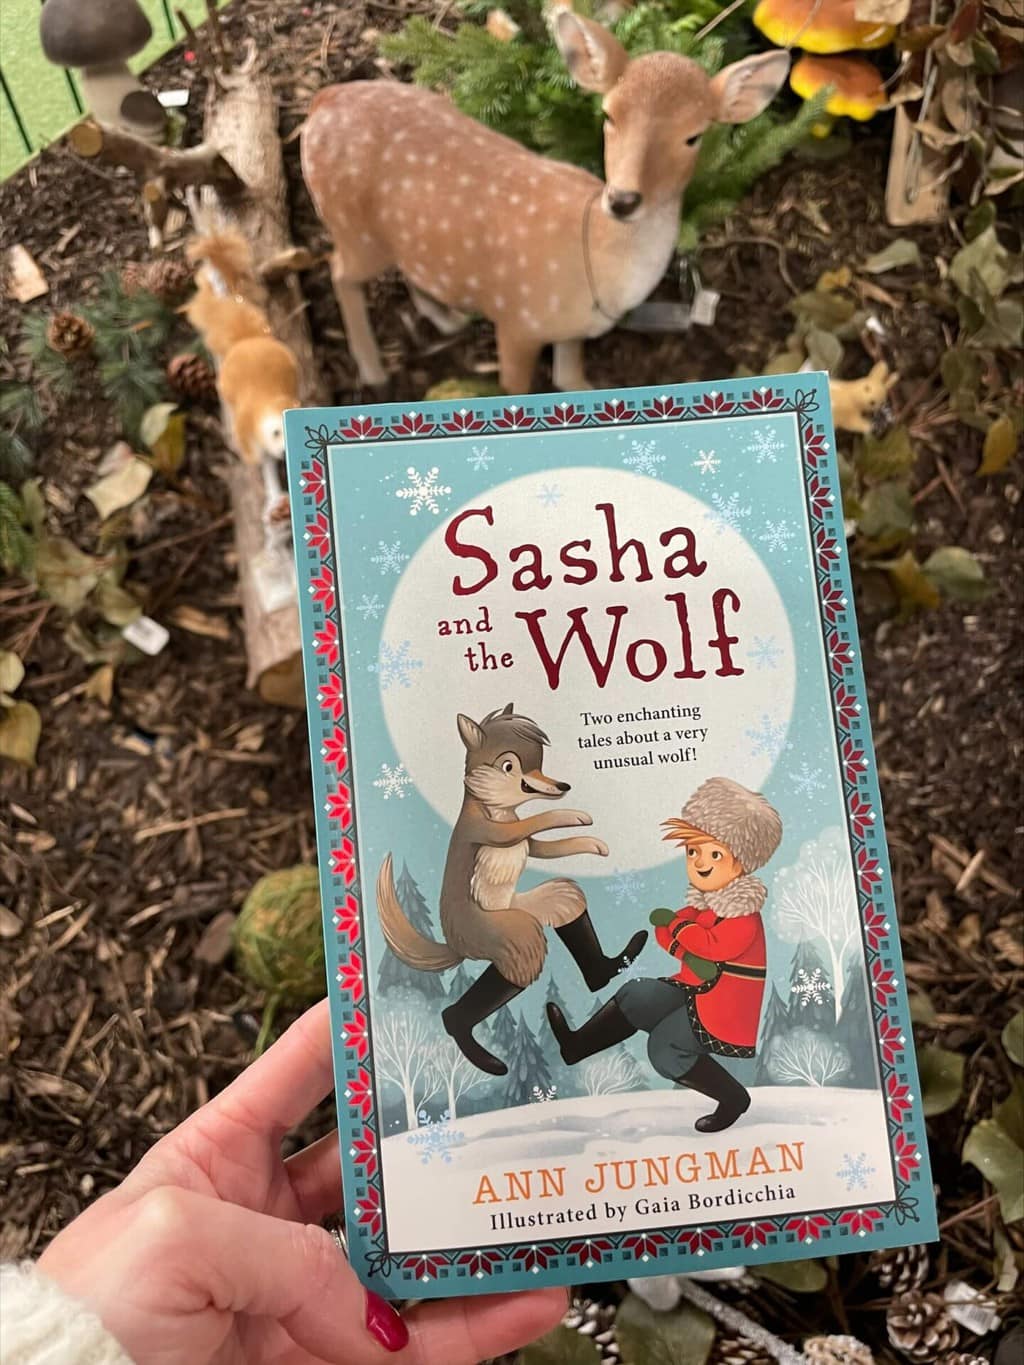 Sasha and the Wolf – Ann Jungman (author), Gaia Bordicchia (illustrator) – Faber & Faber (publisher)